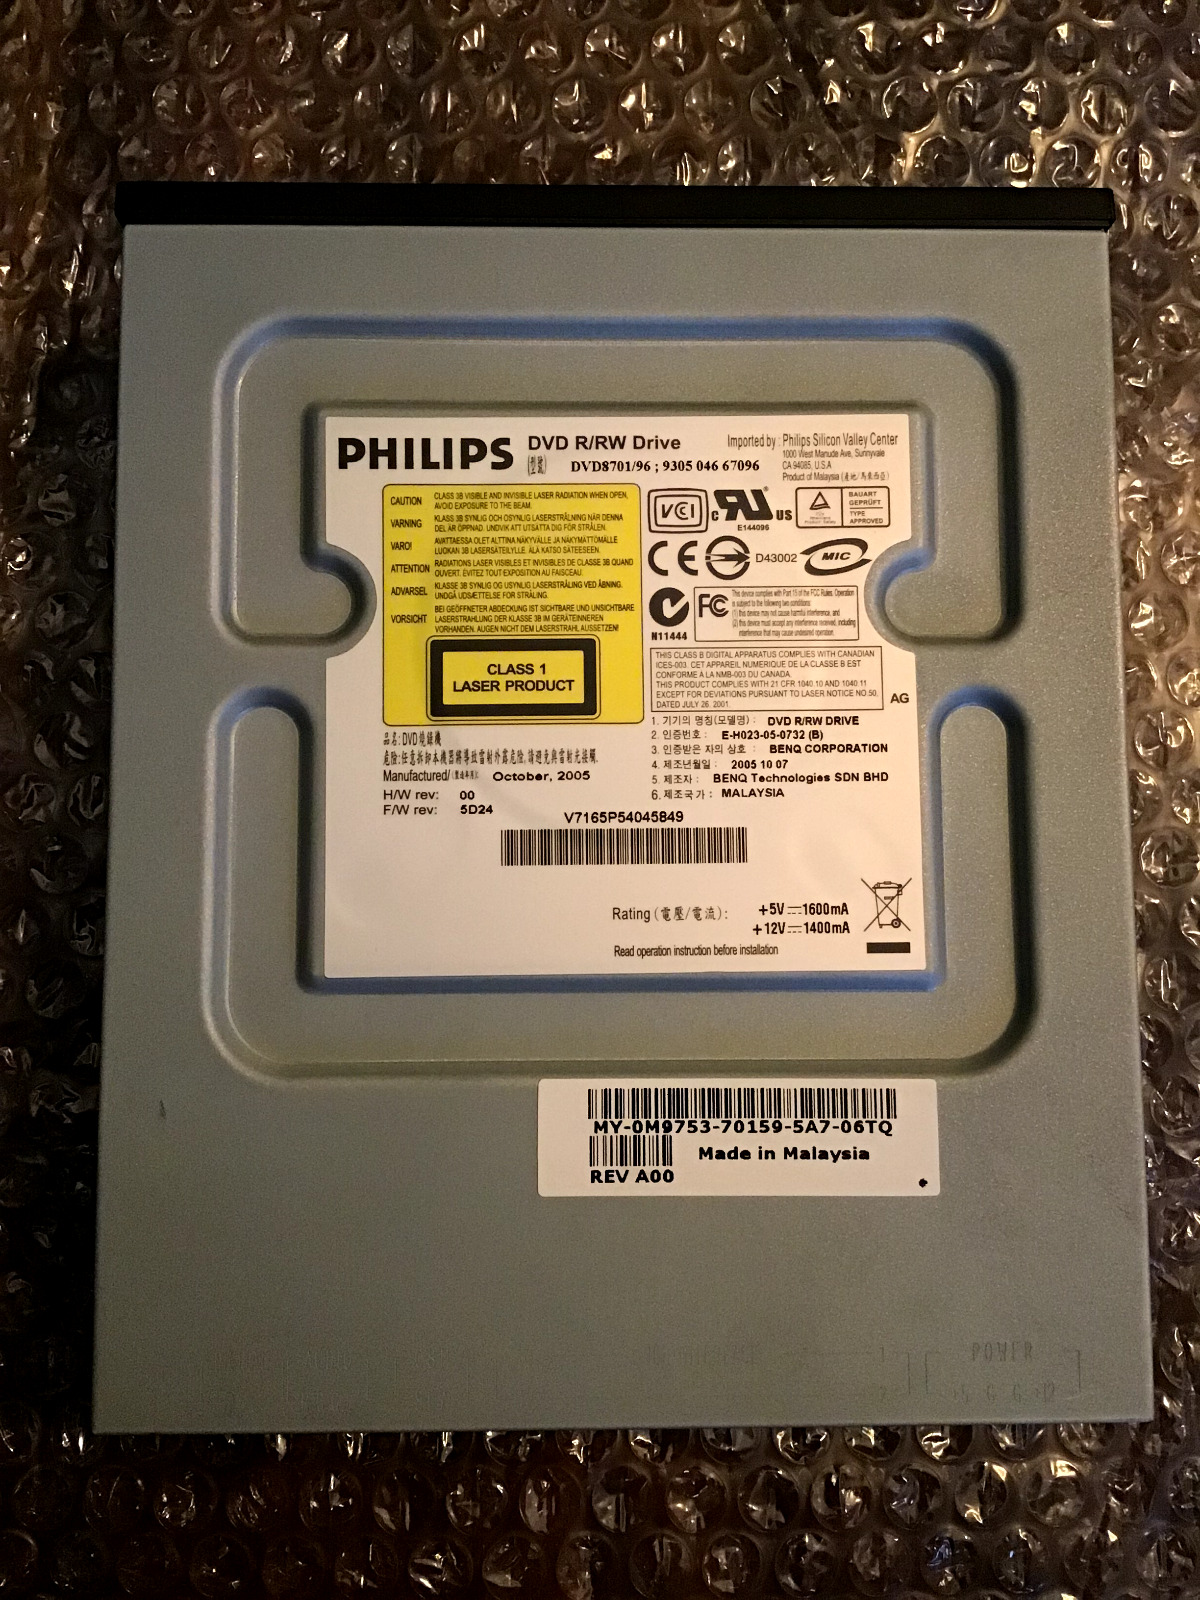 Philips DVD8701/96 16x DVD CD R/RW Internal IDE Drive Black - Tested